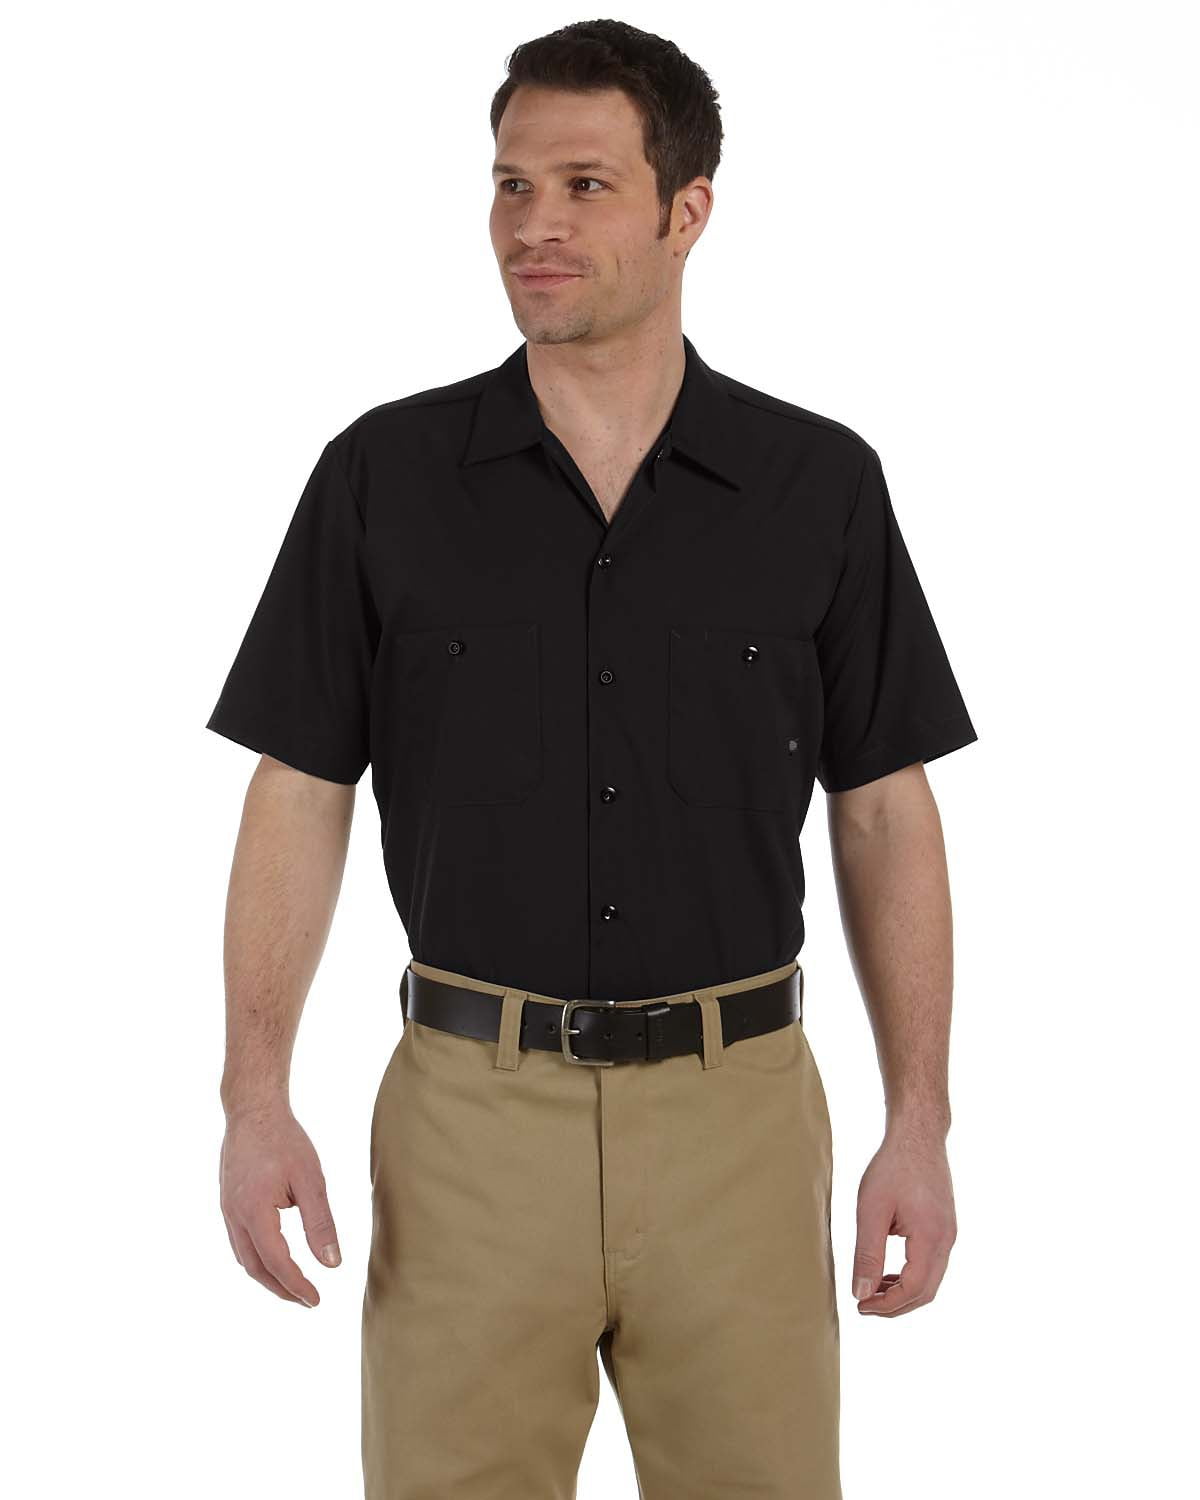 Dickies Men's 4.25 oz Industrial Short-Sleeve Work Shirt Woven S-5XL LS535 